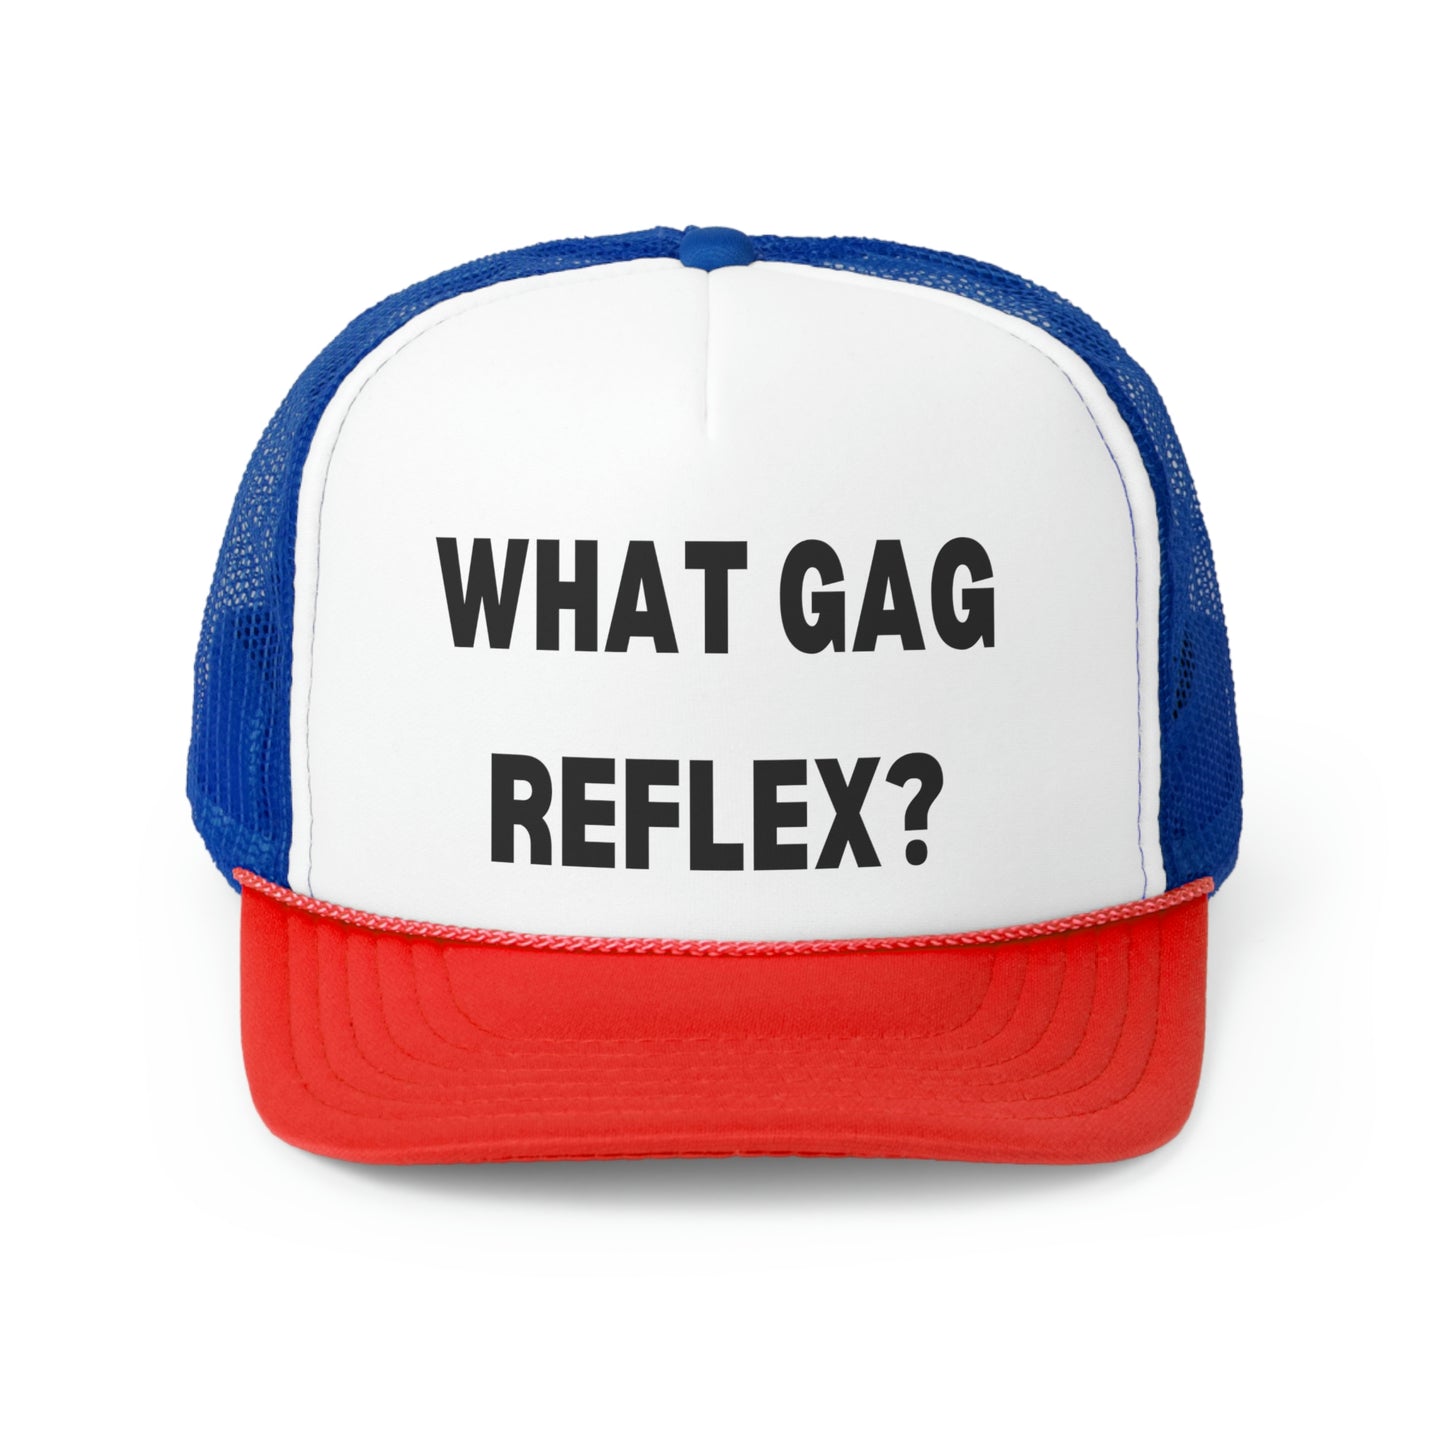 What Gag Reflex?